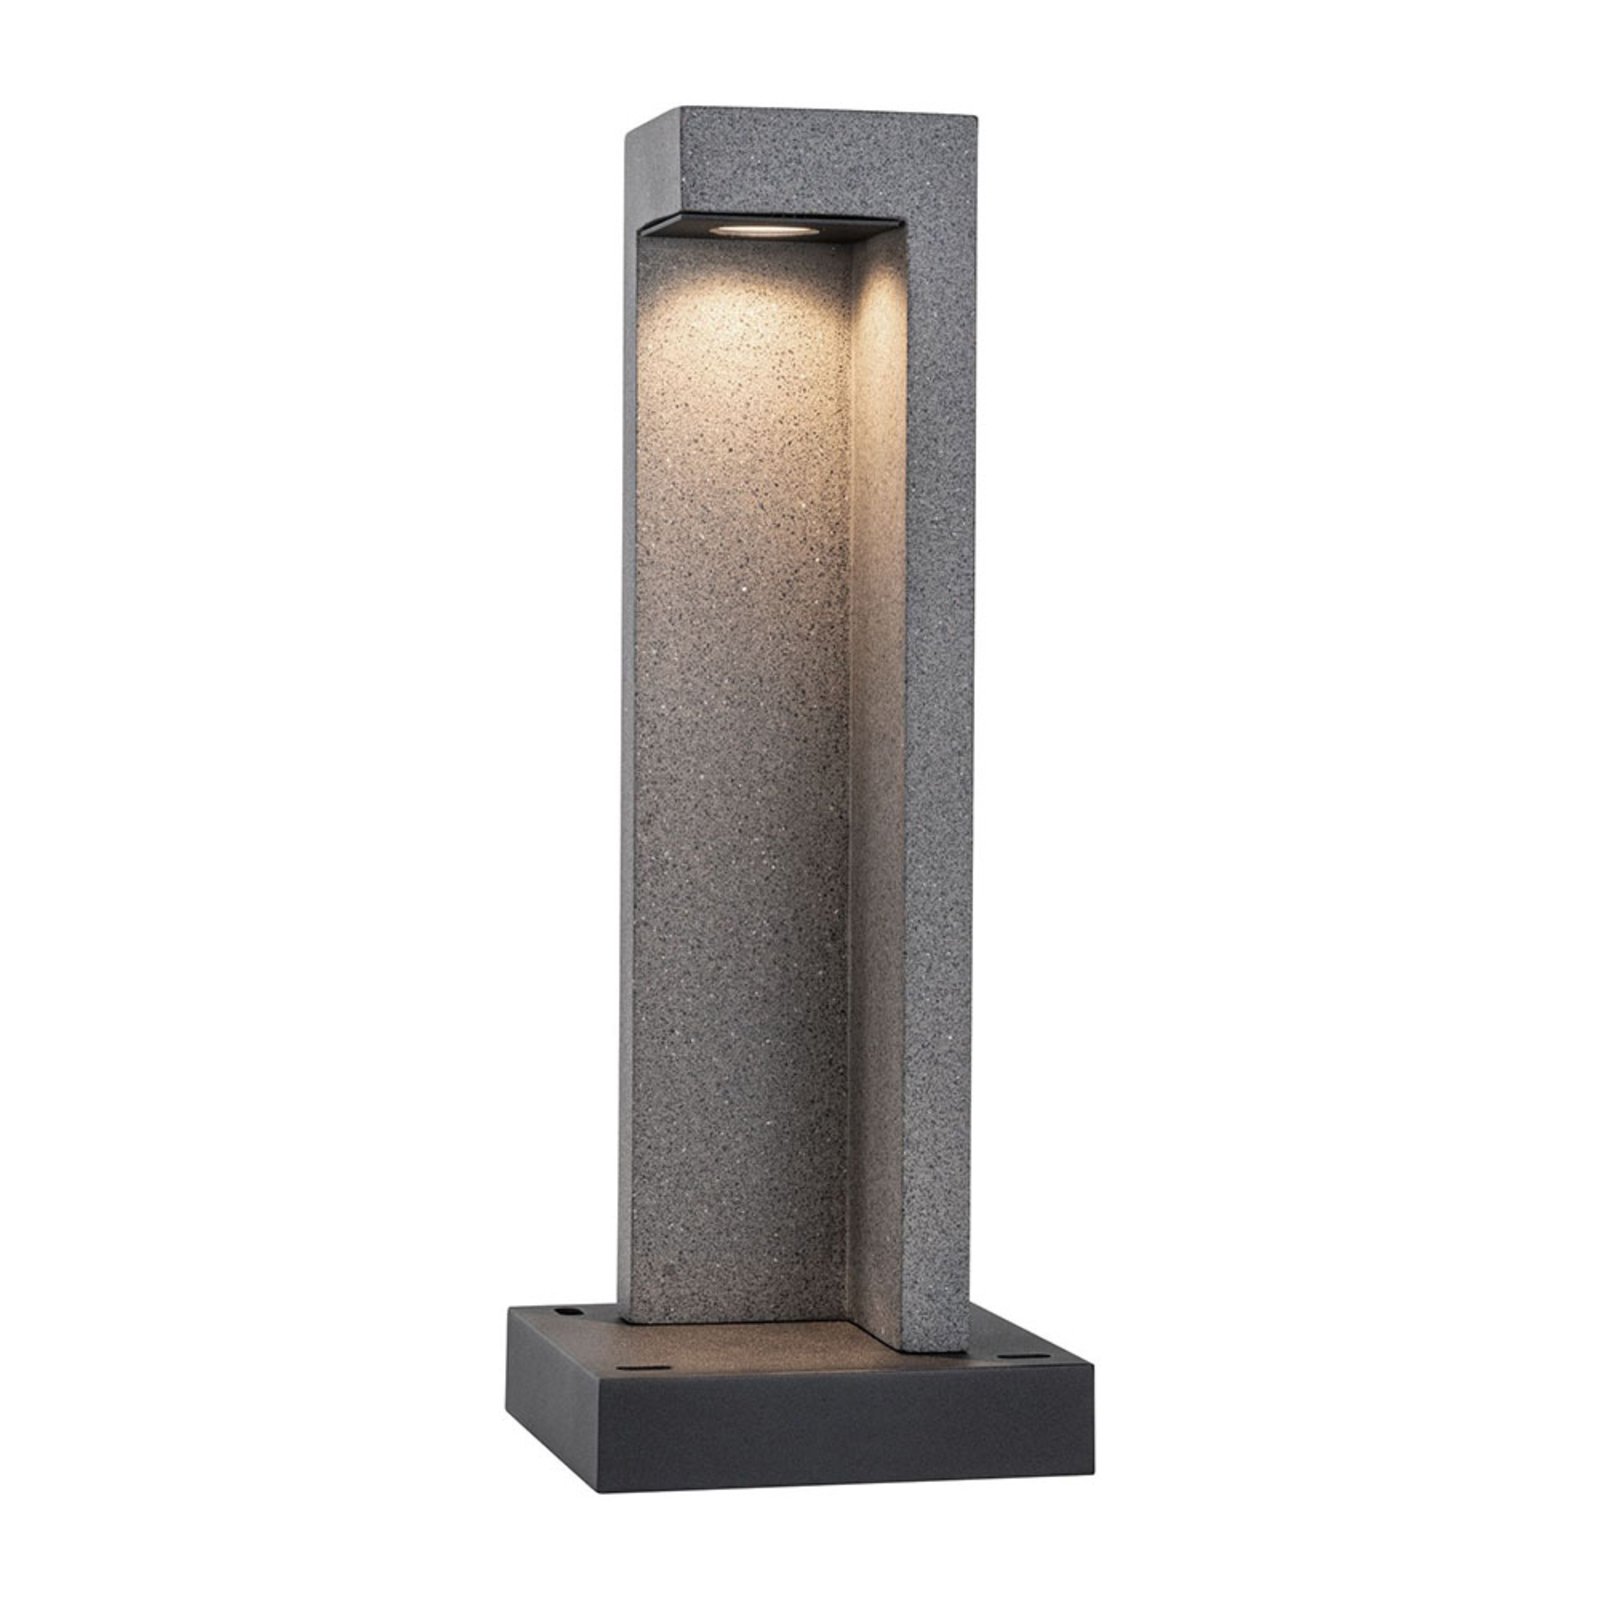 Paulmann Concrea LED talapzati lámpa, magasság45cm